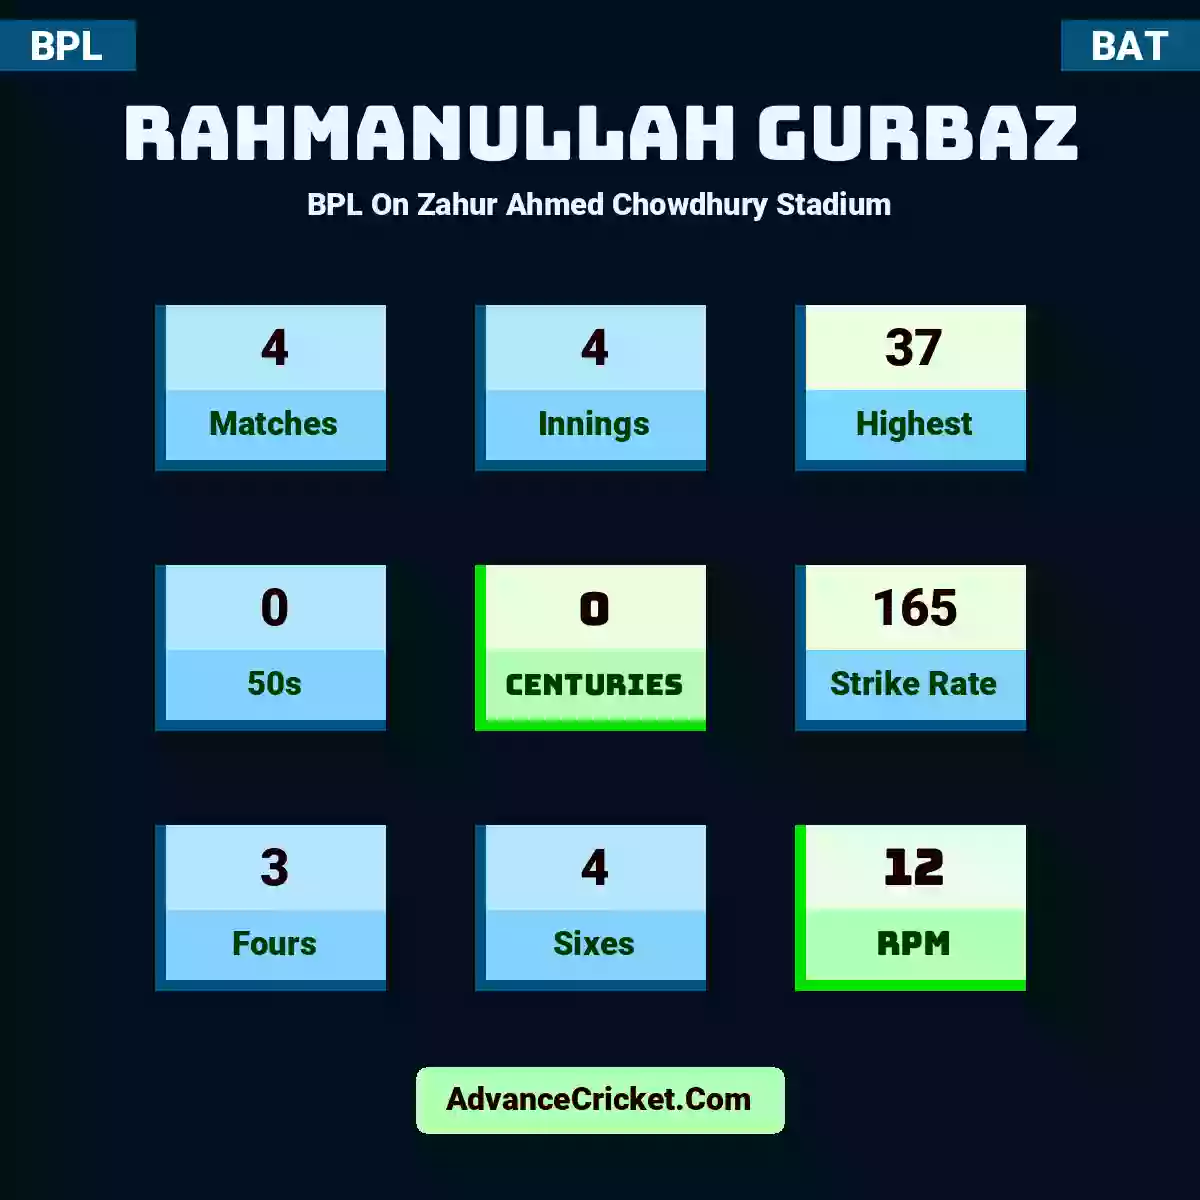 Rahmanullah Gurbaz BPL  On Zahur Ahmed Chowdhury Stadium, Rahmanullah Gurbaz played 4 matches, scored 37 runs as highest, 0 half-centuries, and 0 centuries, with a strike rate of 165. R.Gurbaz hit 3 fours and 4 sixes, with an RPM of 12.